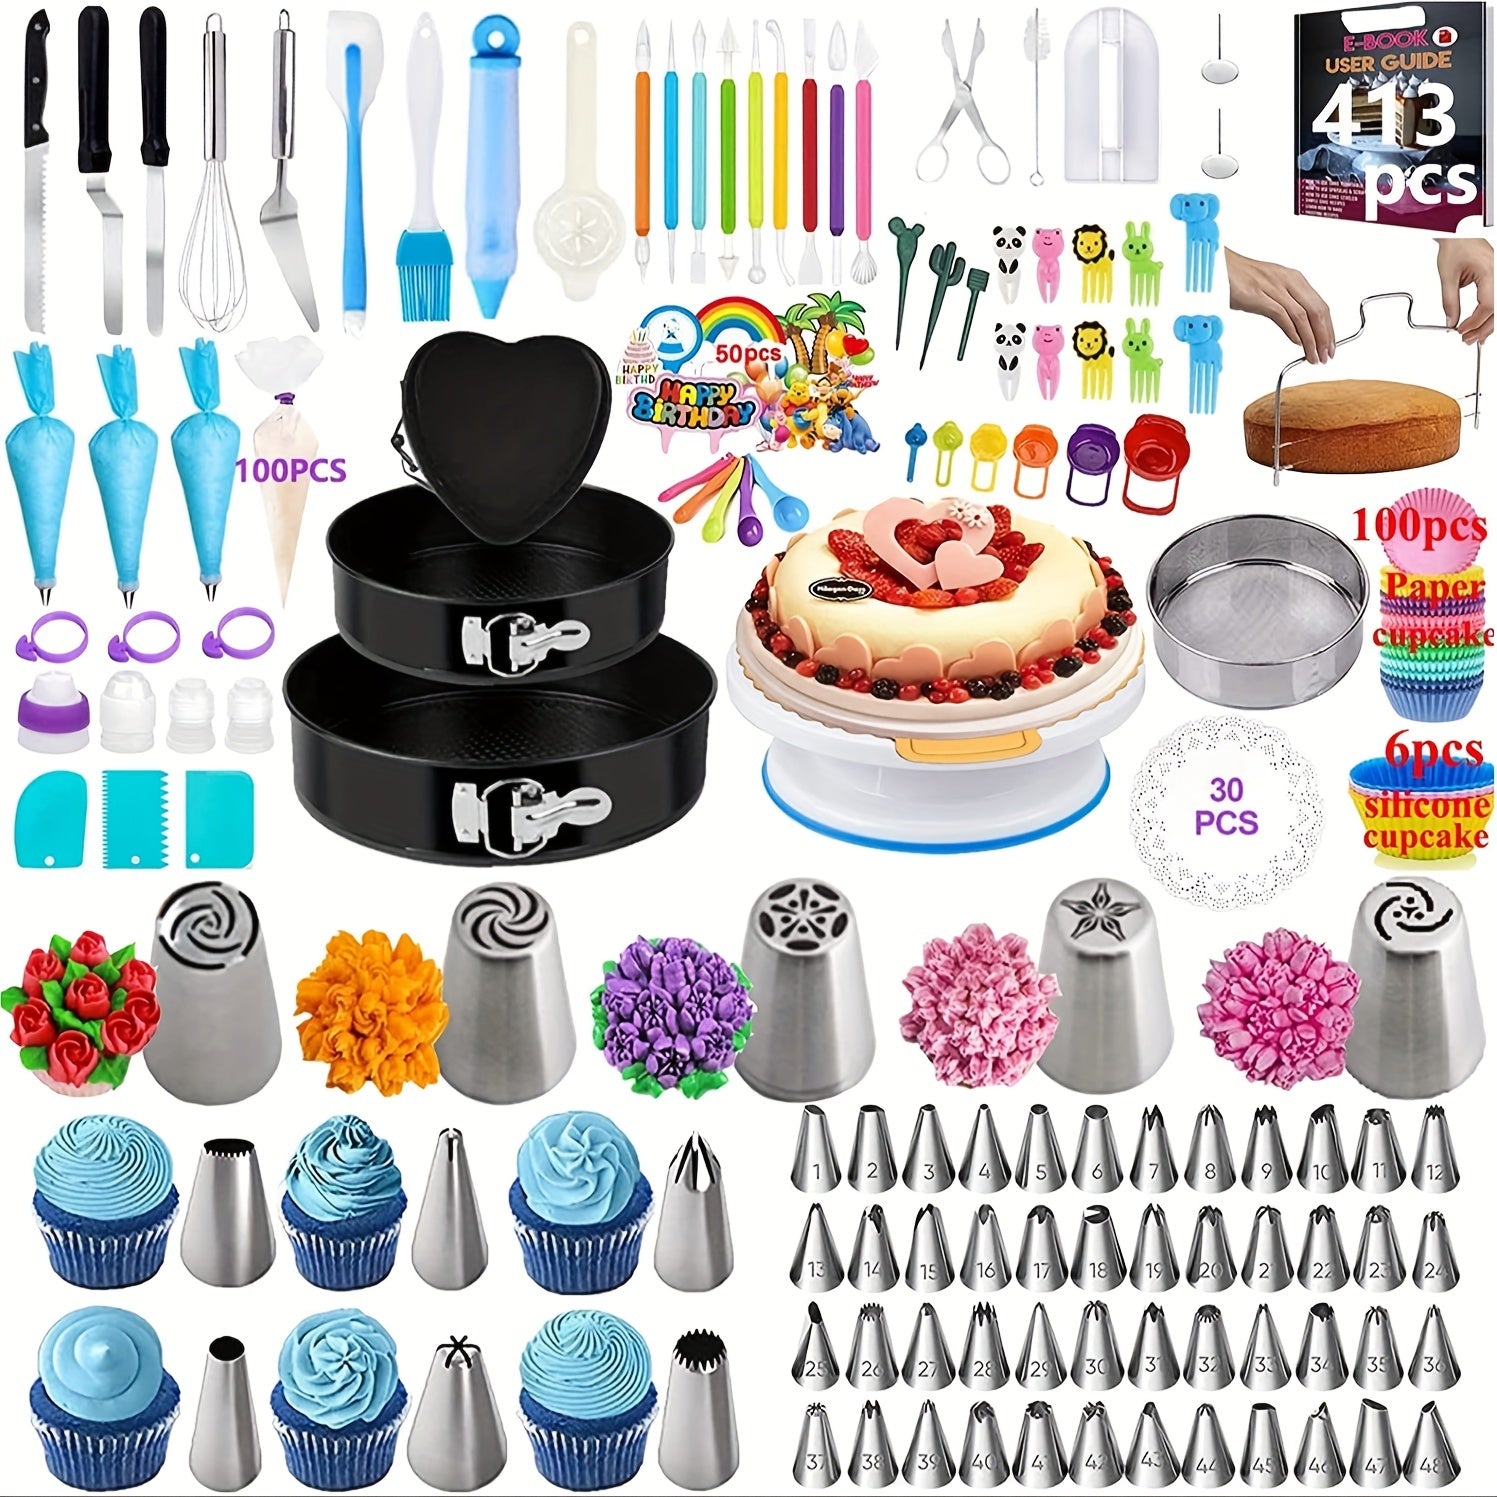 413pcs, Cake Decorating Supplies, Cake Decorating Kit, Cake Rotating Turntable, Piping Icing Tips, Baking Supplies, Cupcake Decorating Kit